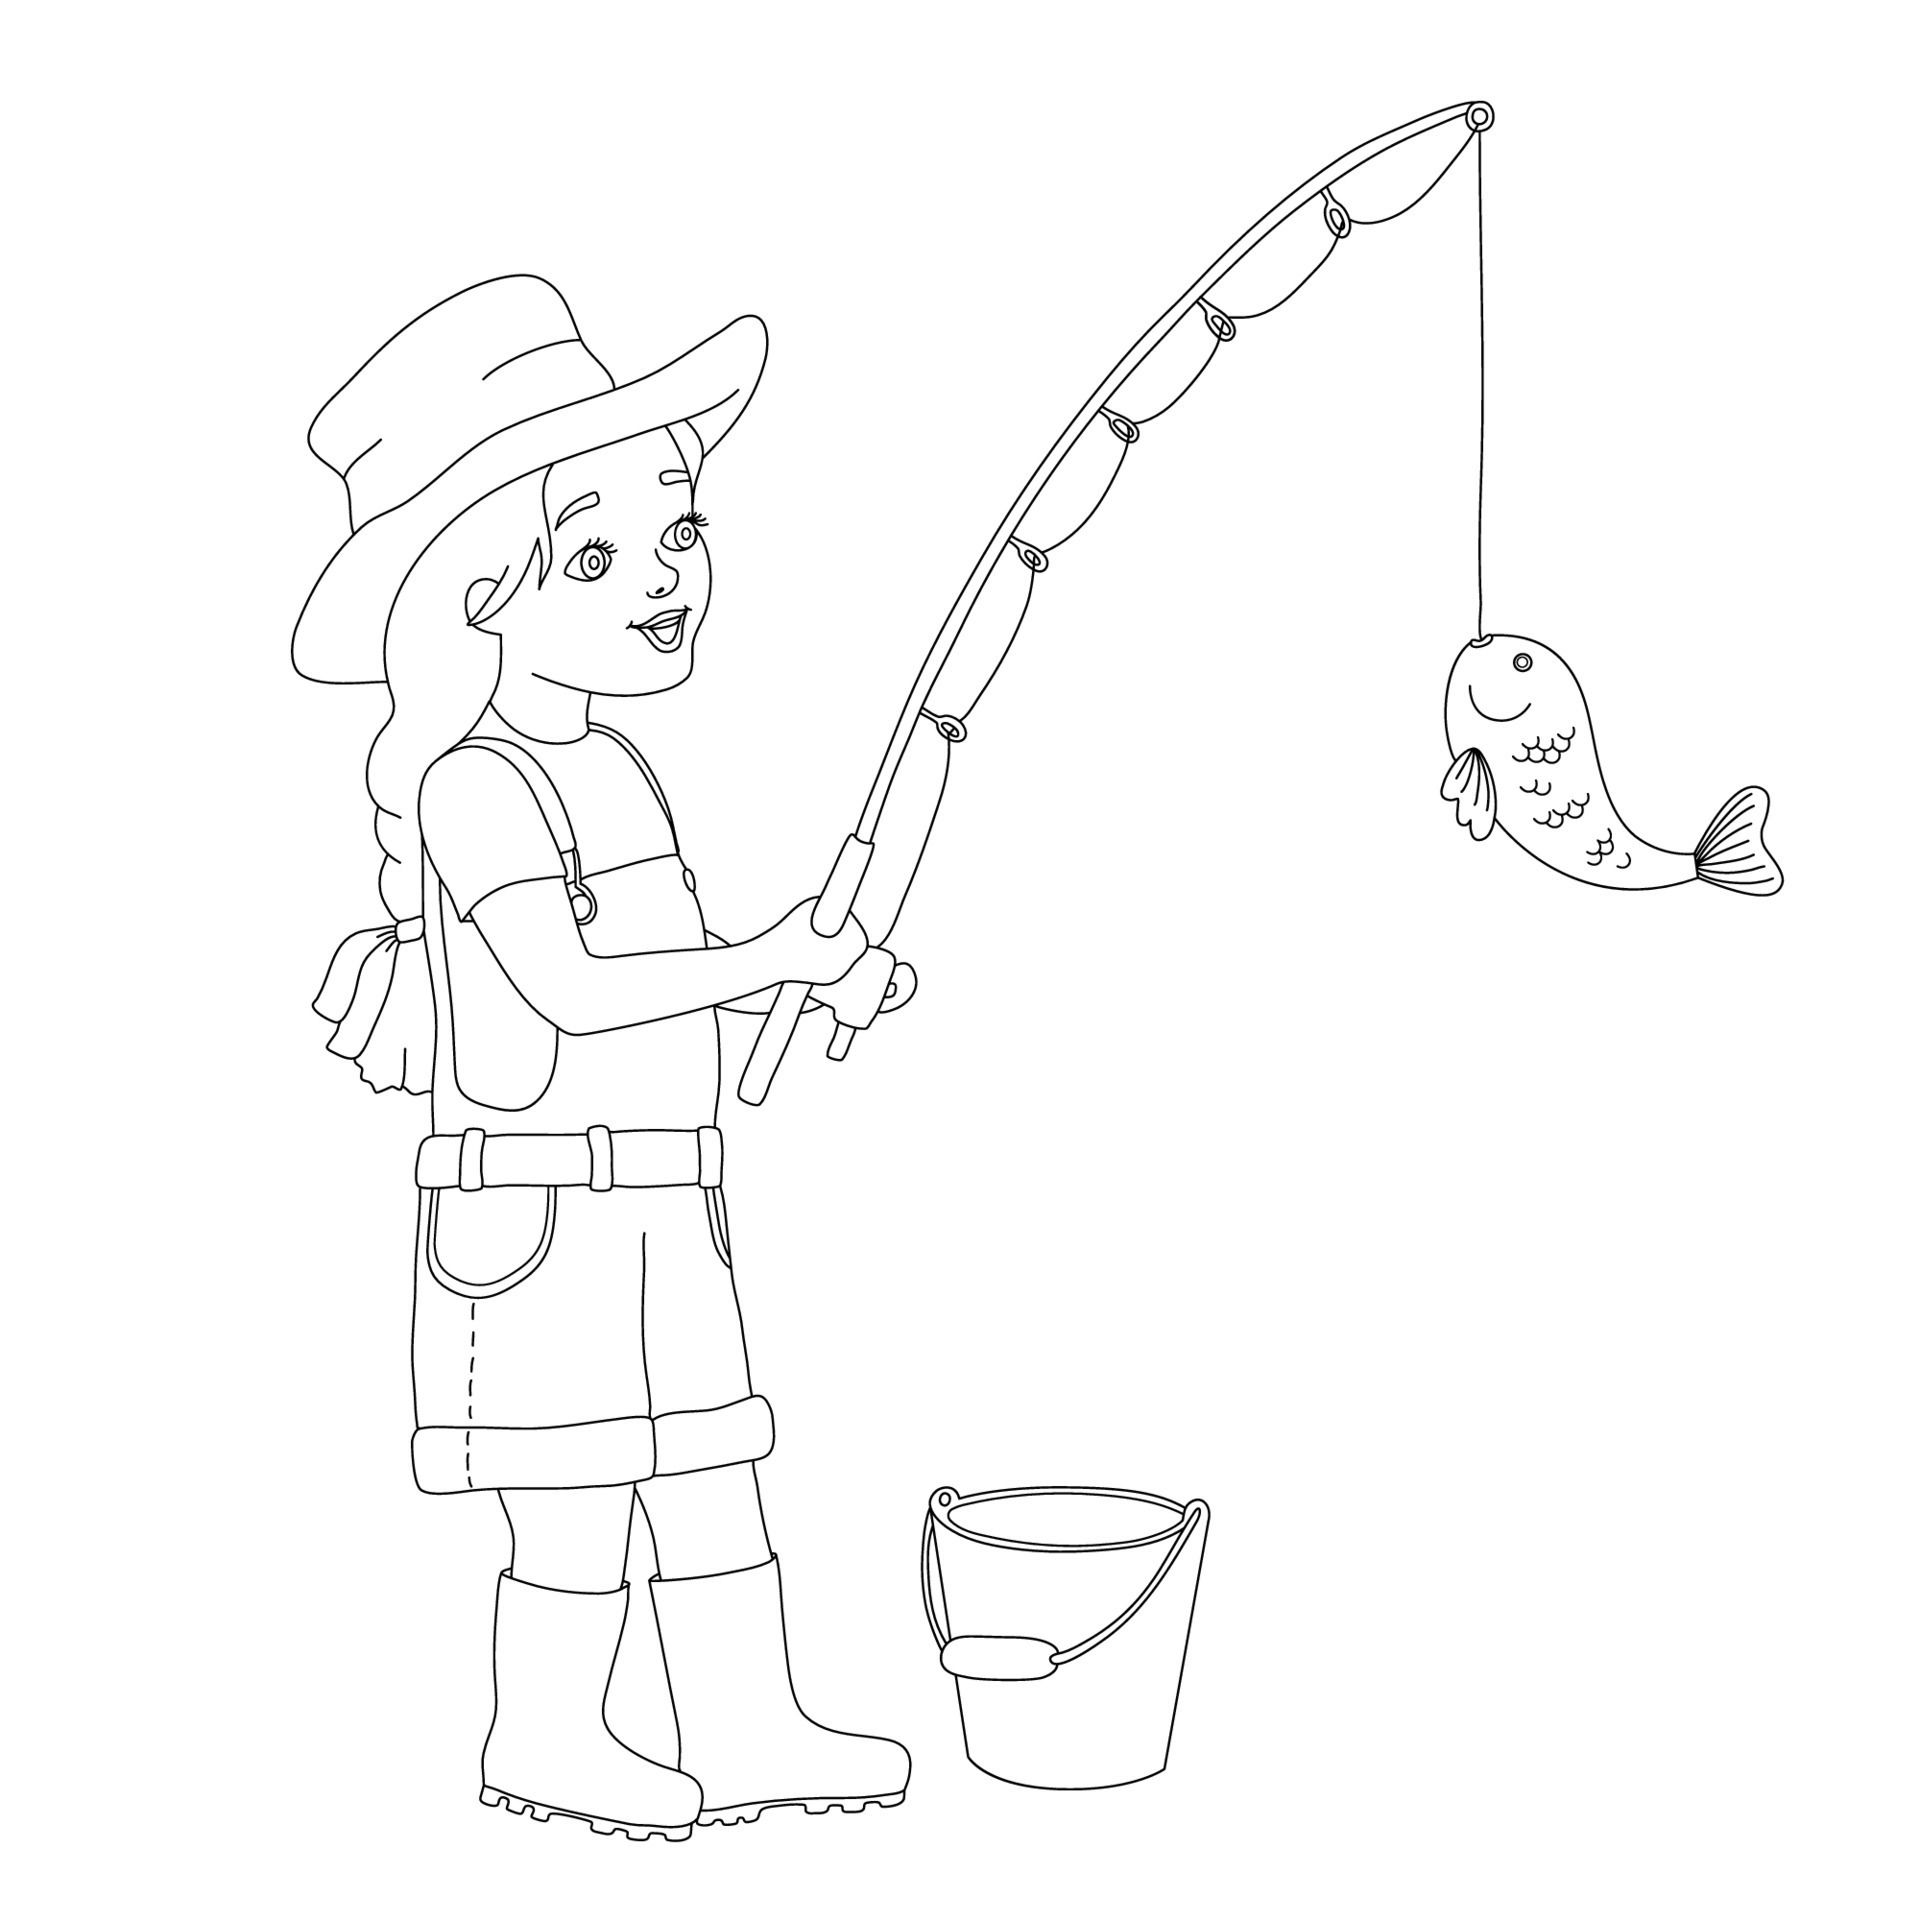 Little girl fishing. Full length of smiling girl holding fishing rod with  fish on hook. Vector outline illustration isolated on white background.  24230620 Vector Art at Vecteezy